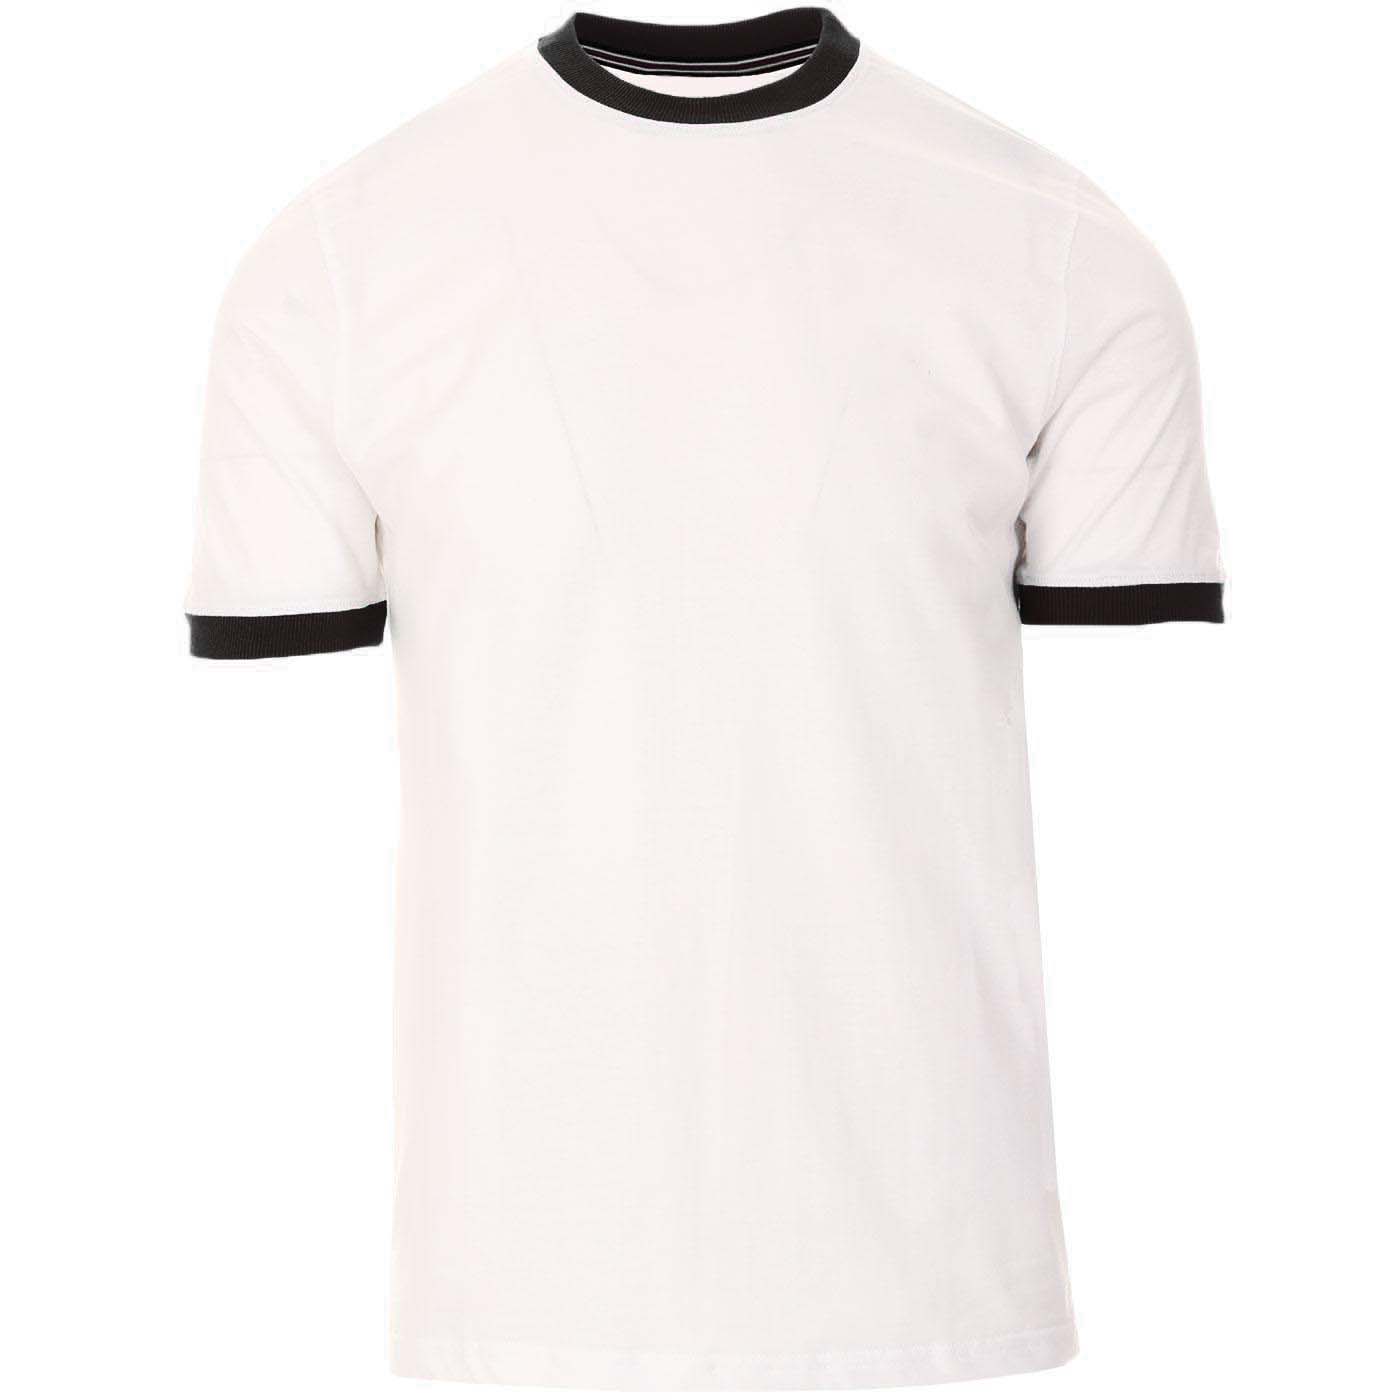 Men's White Cotton T-Shirt With Black Crew Neck